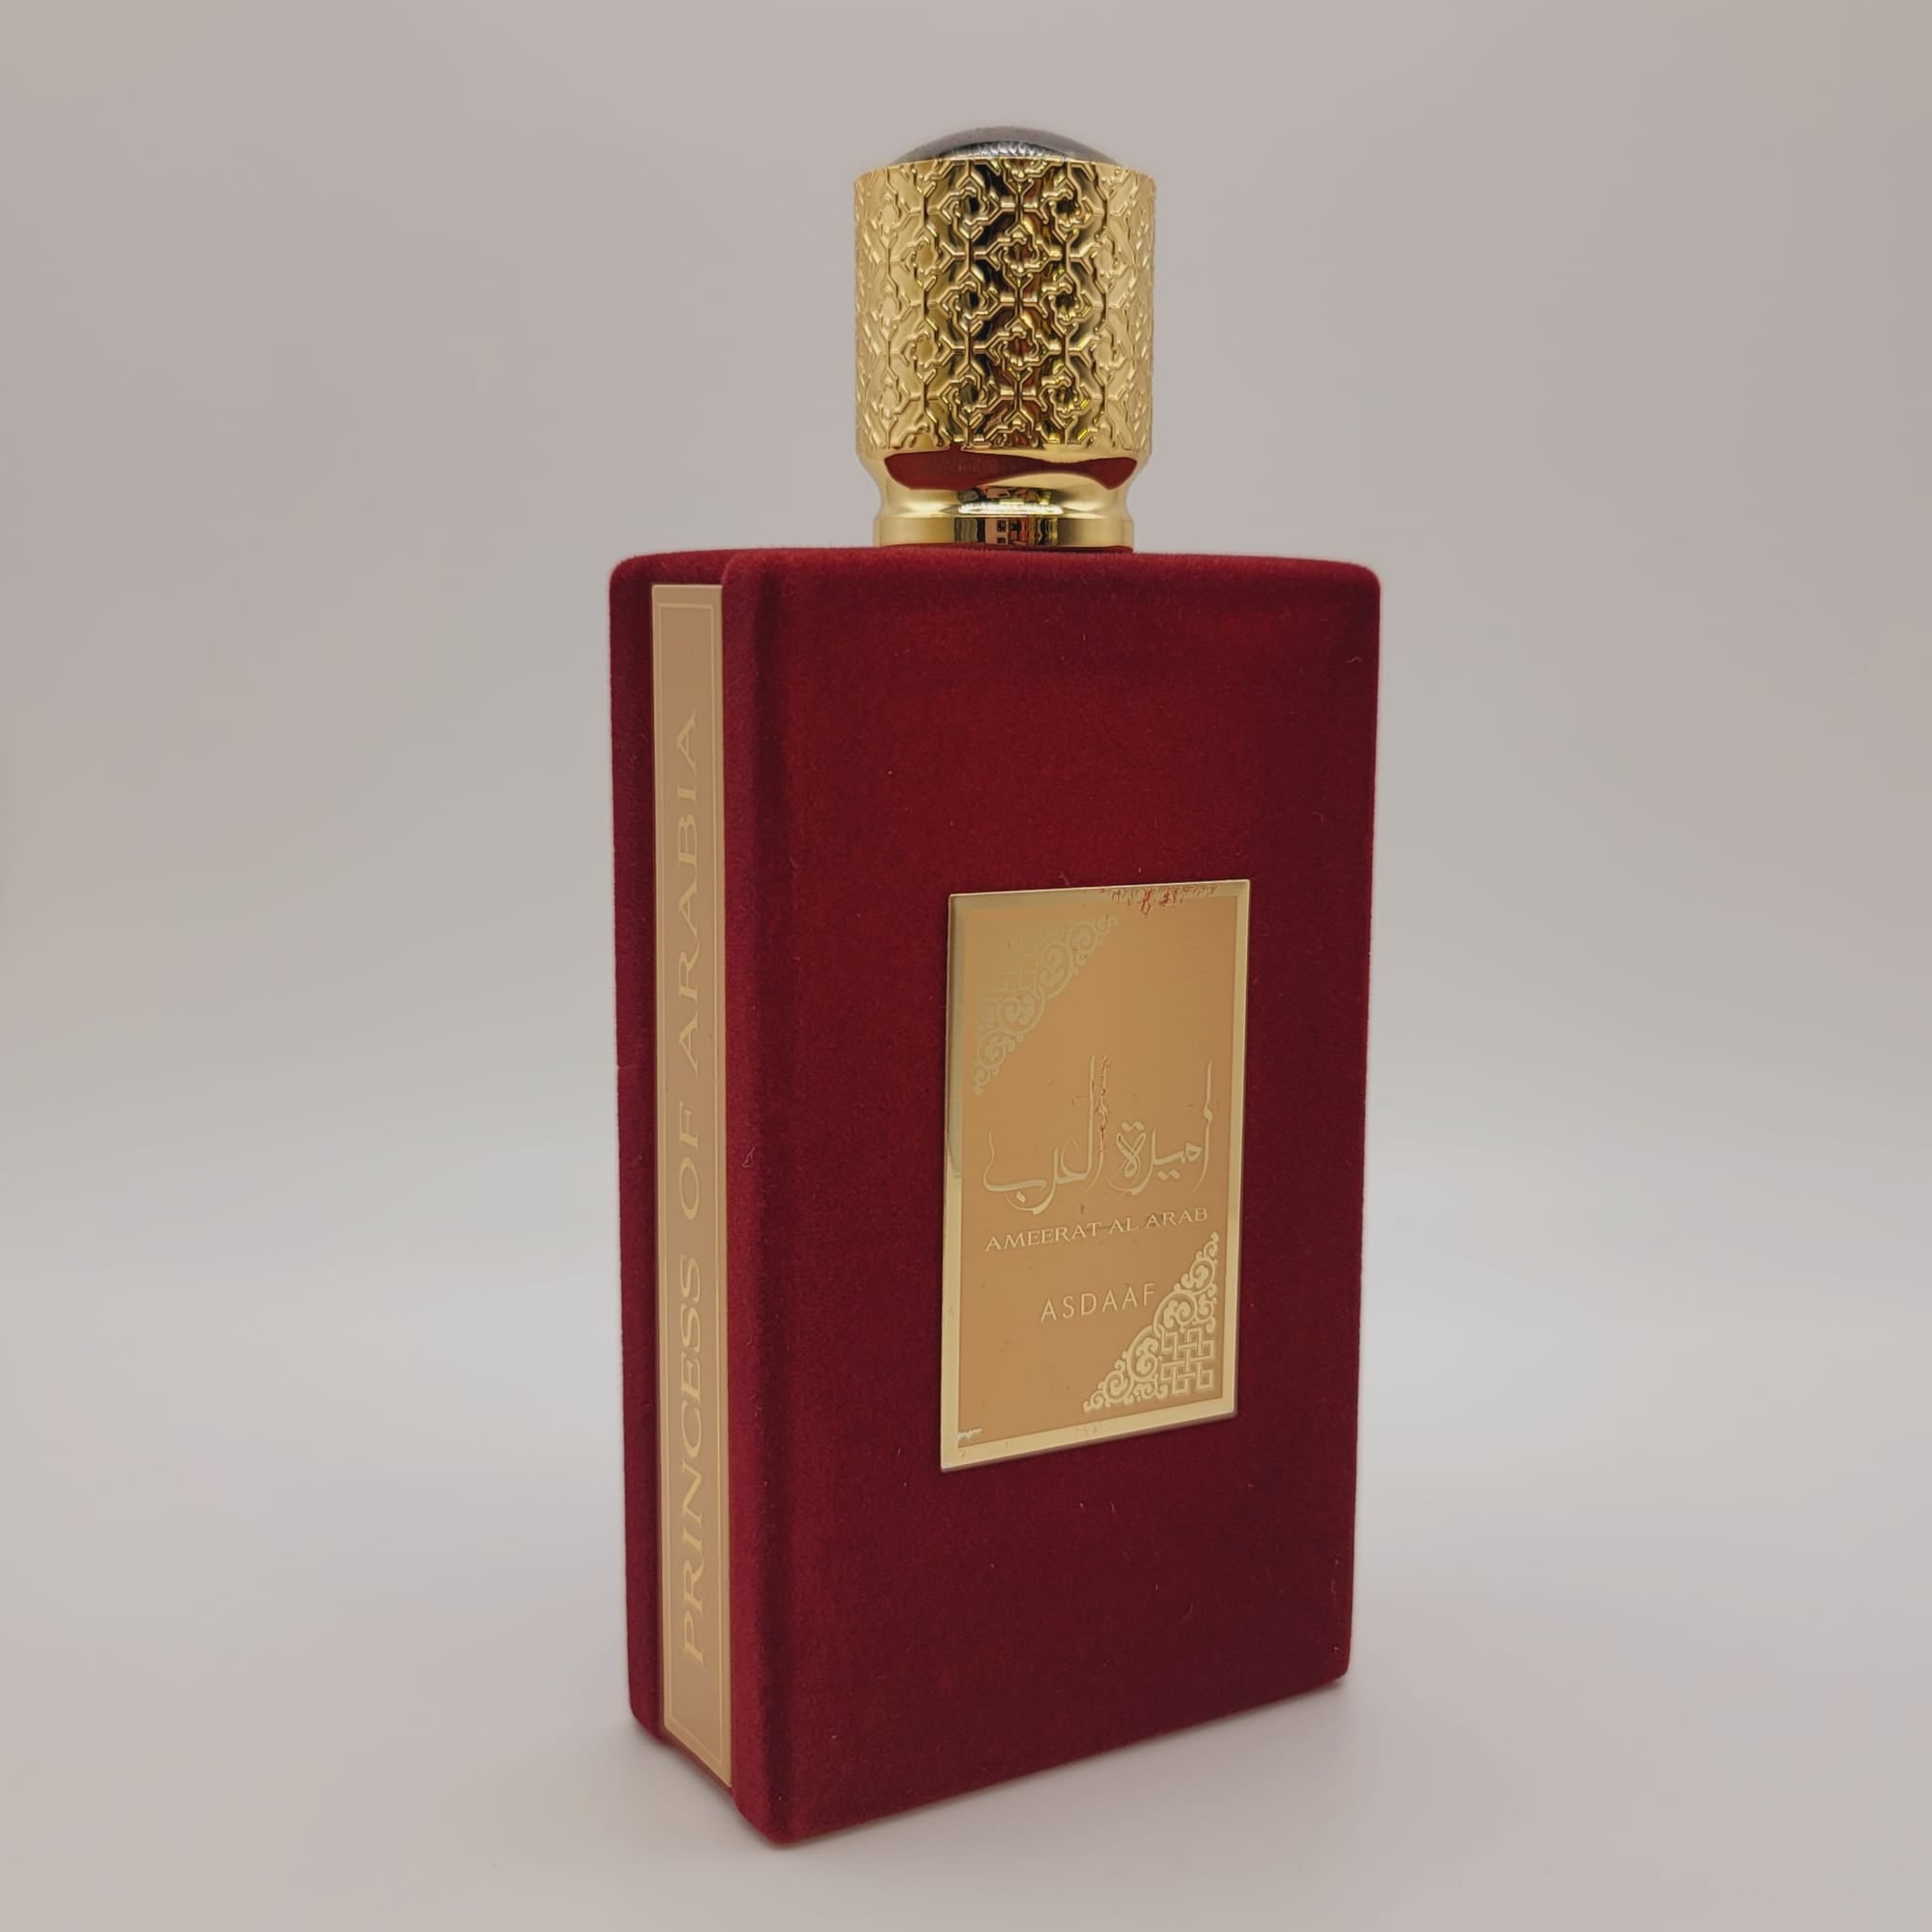 Ameerat Al Arab by Lattafa - Princess Of Arabia Eau De Parfum 3.4 Oz for Women: Exquisite Oriental Fragrance